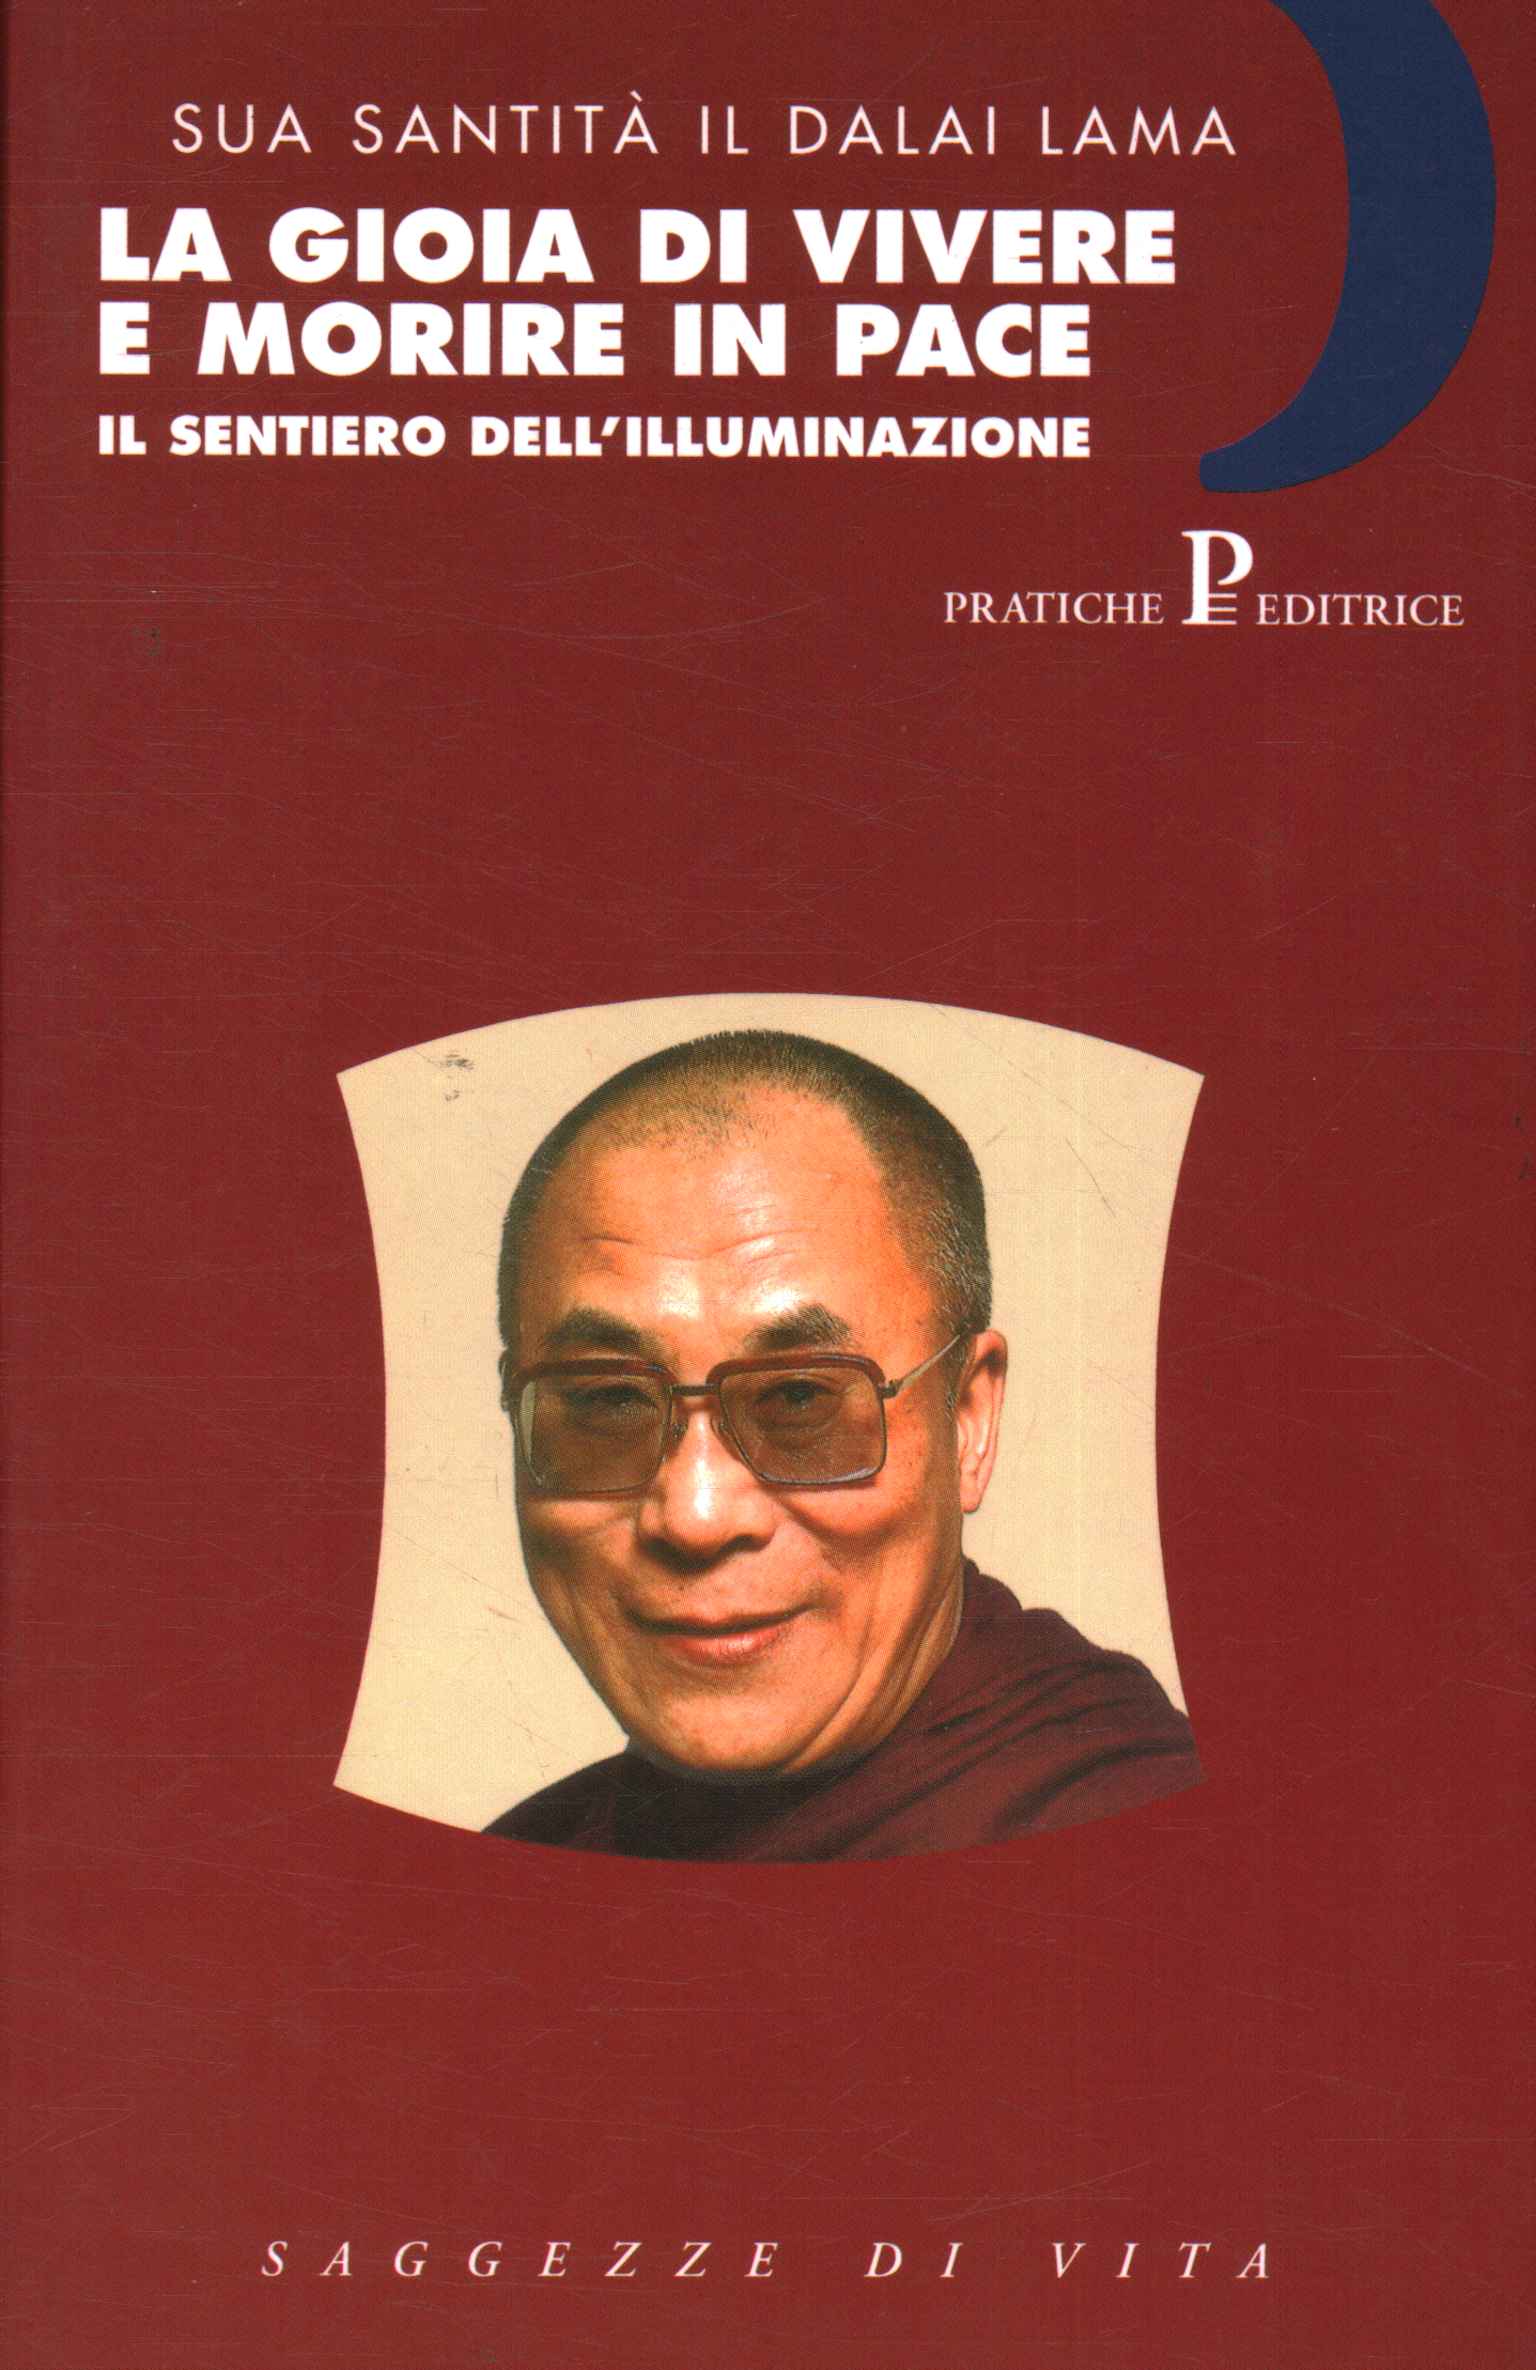 His Holiness the Dalai Lama: The